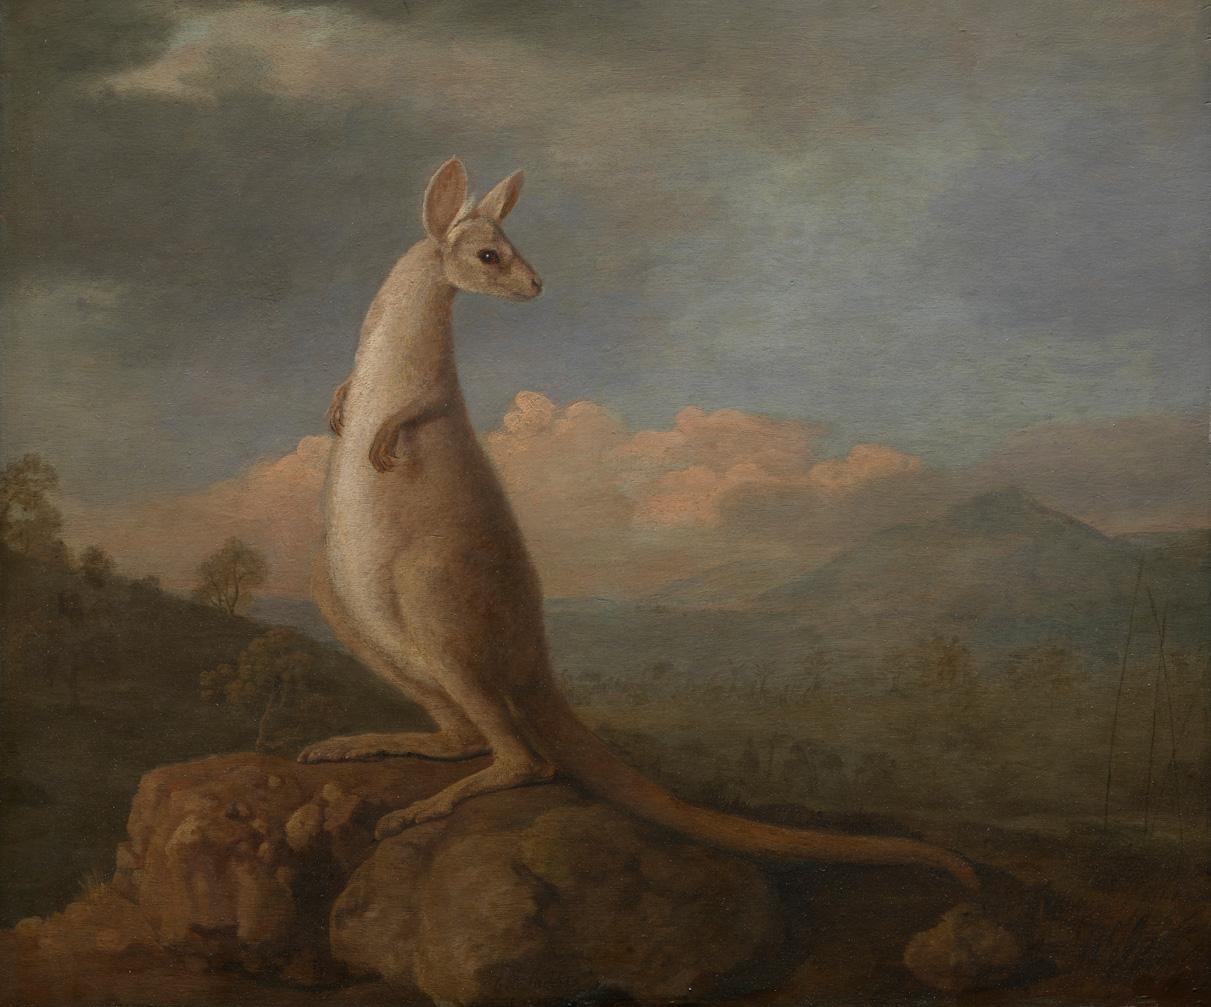 Painting of a kangaroo